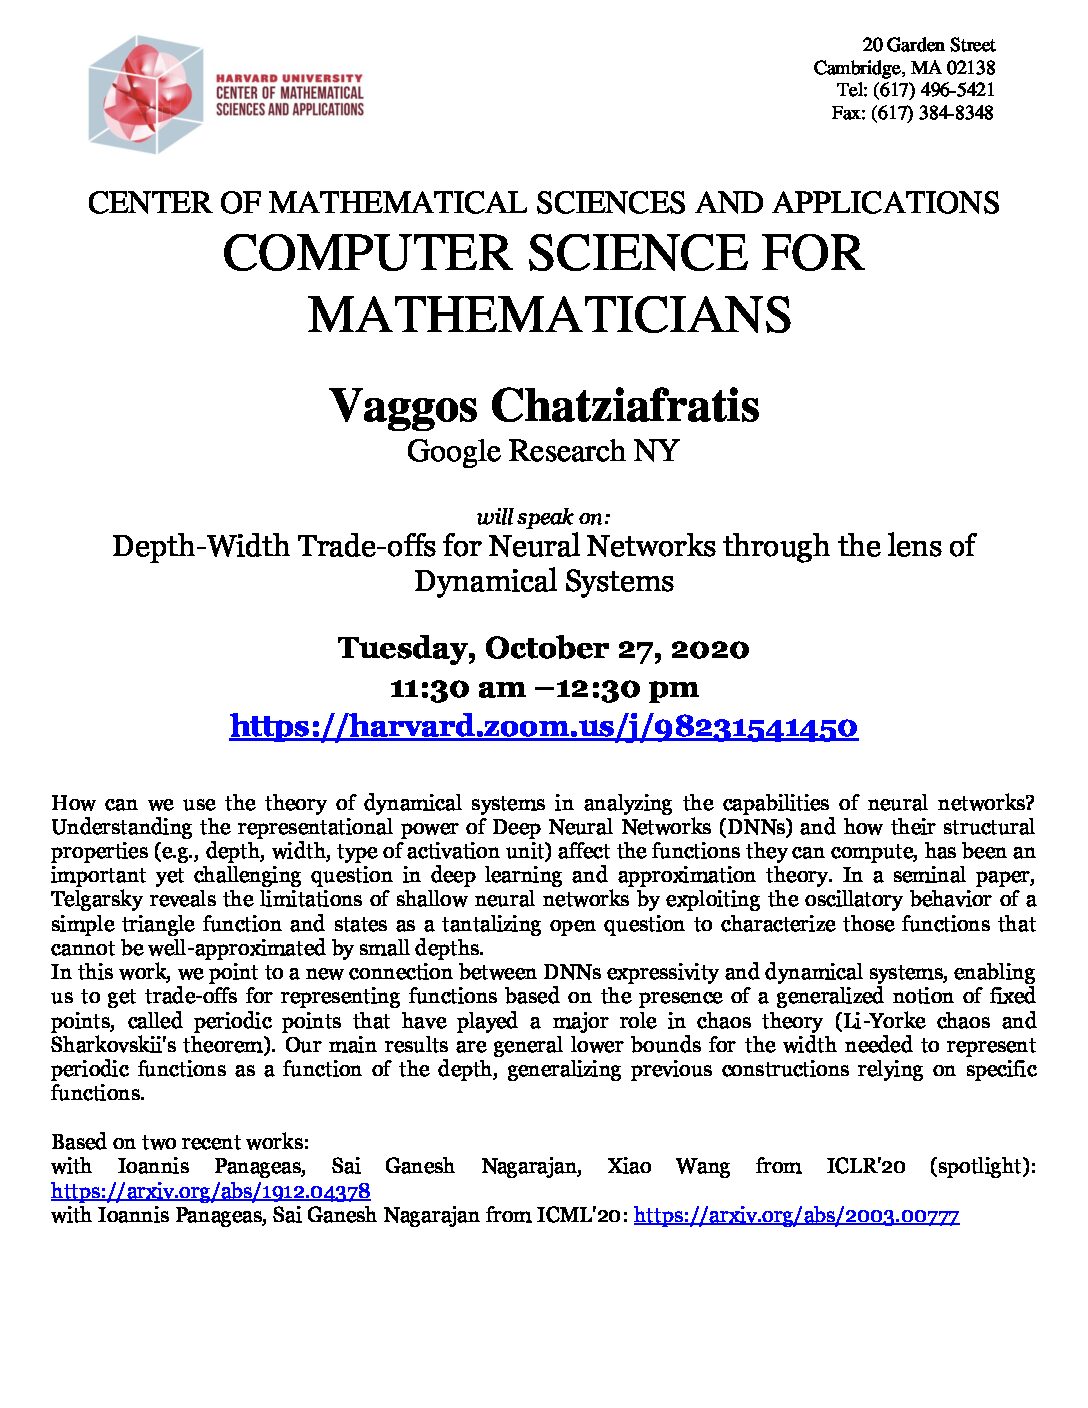 CMSA-Computer-Science-for-Mathematicians-10.27.20-pdf